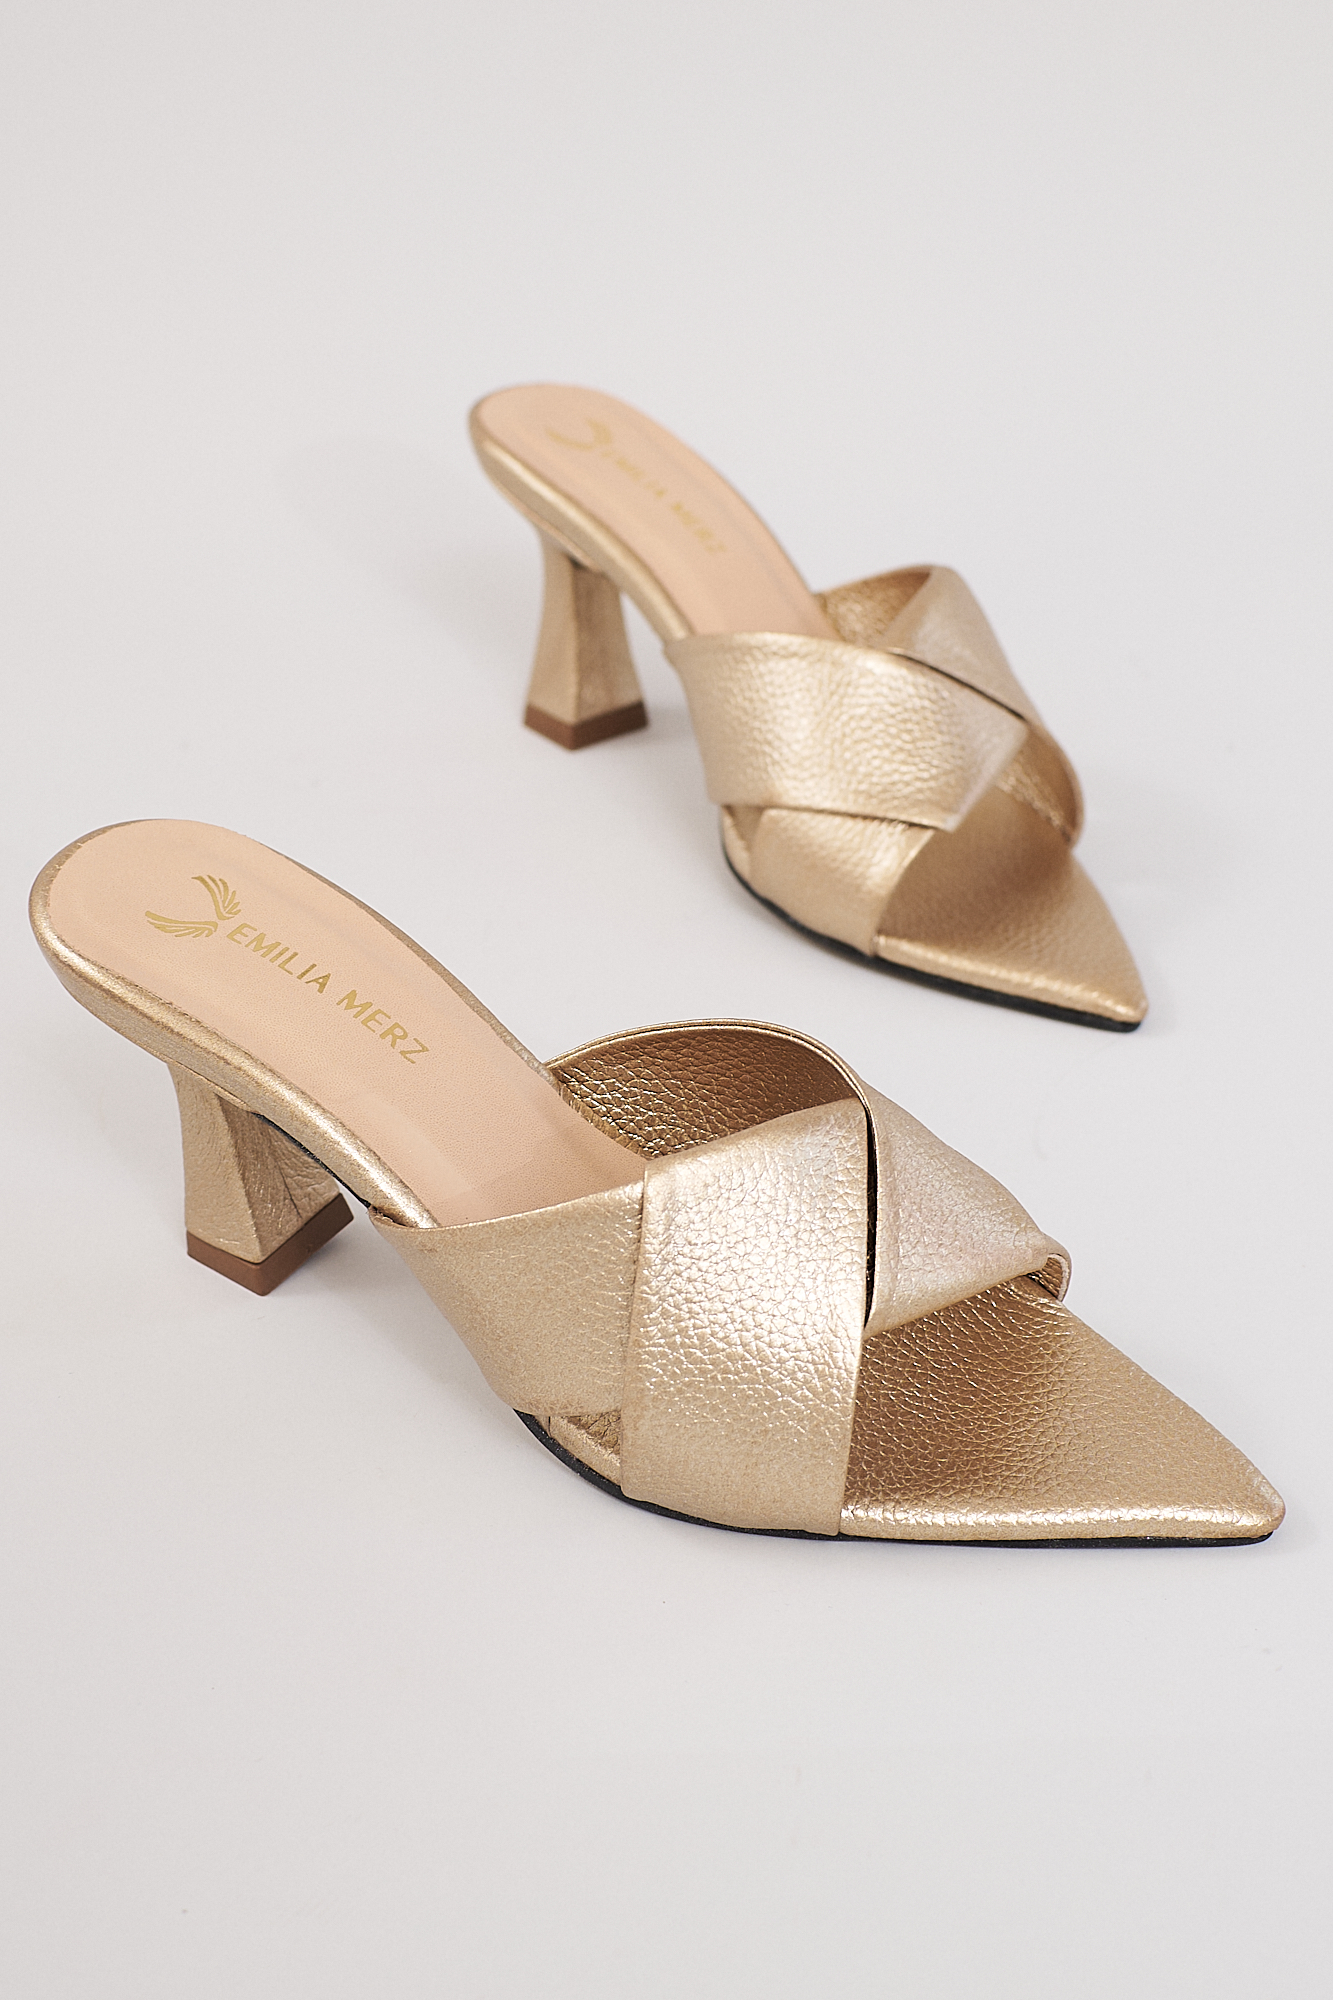 golden heels with open toes from emilia merz